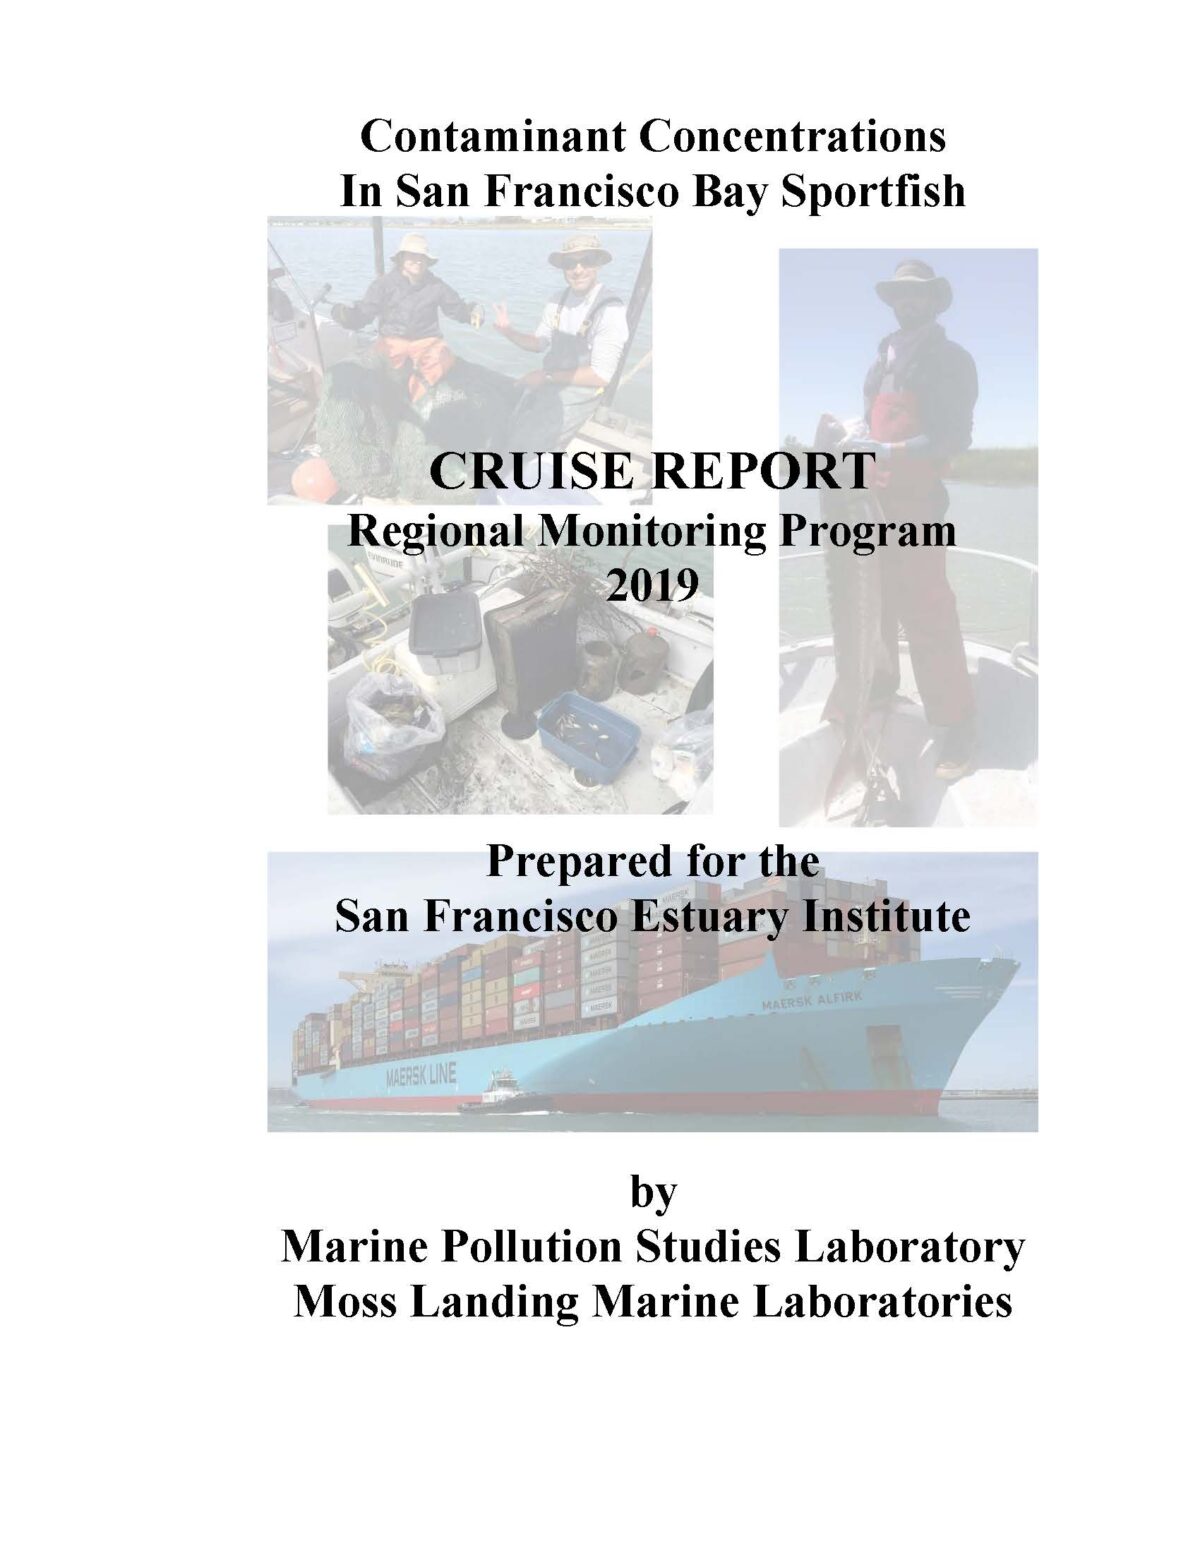 Contaminant Concentrations in San Francisco Bay Sportfish, Cruise Report Regional Monitoring Program (RMP) 2019